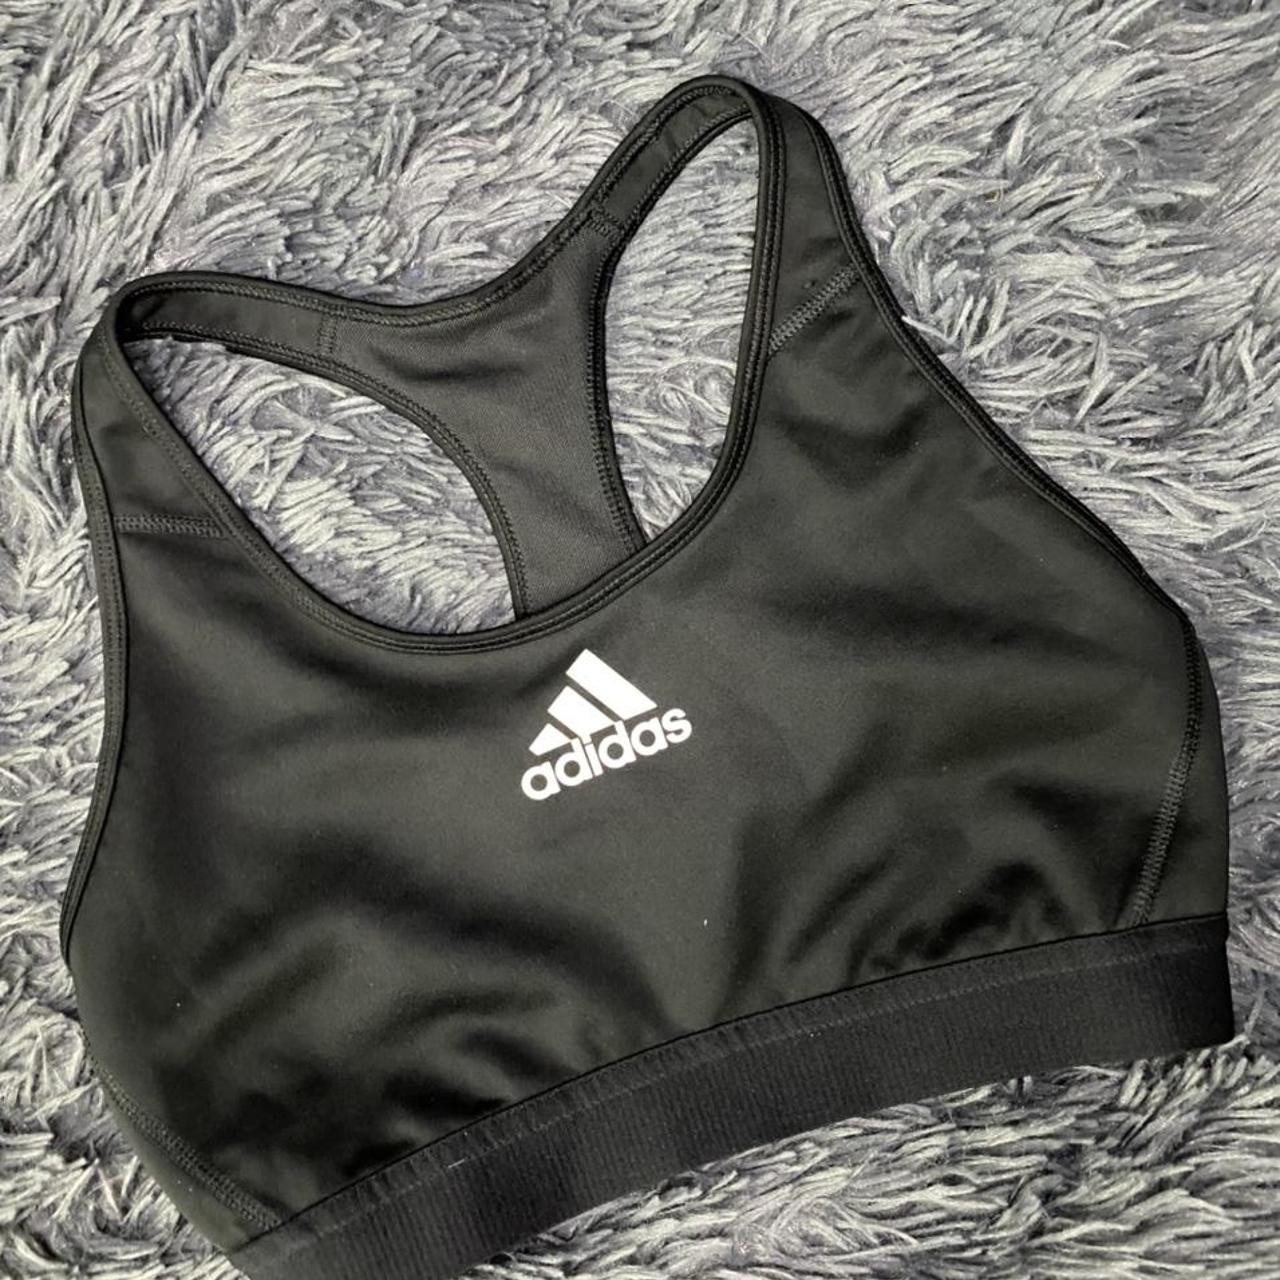 Black basic sports bra Size M - Depop